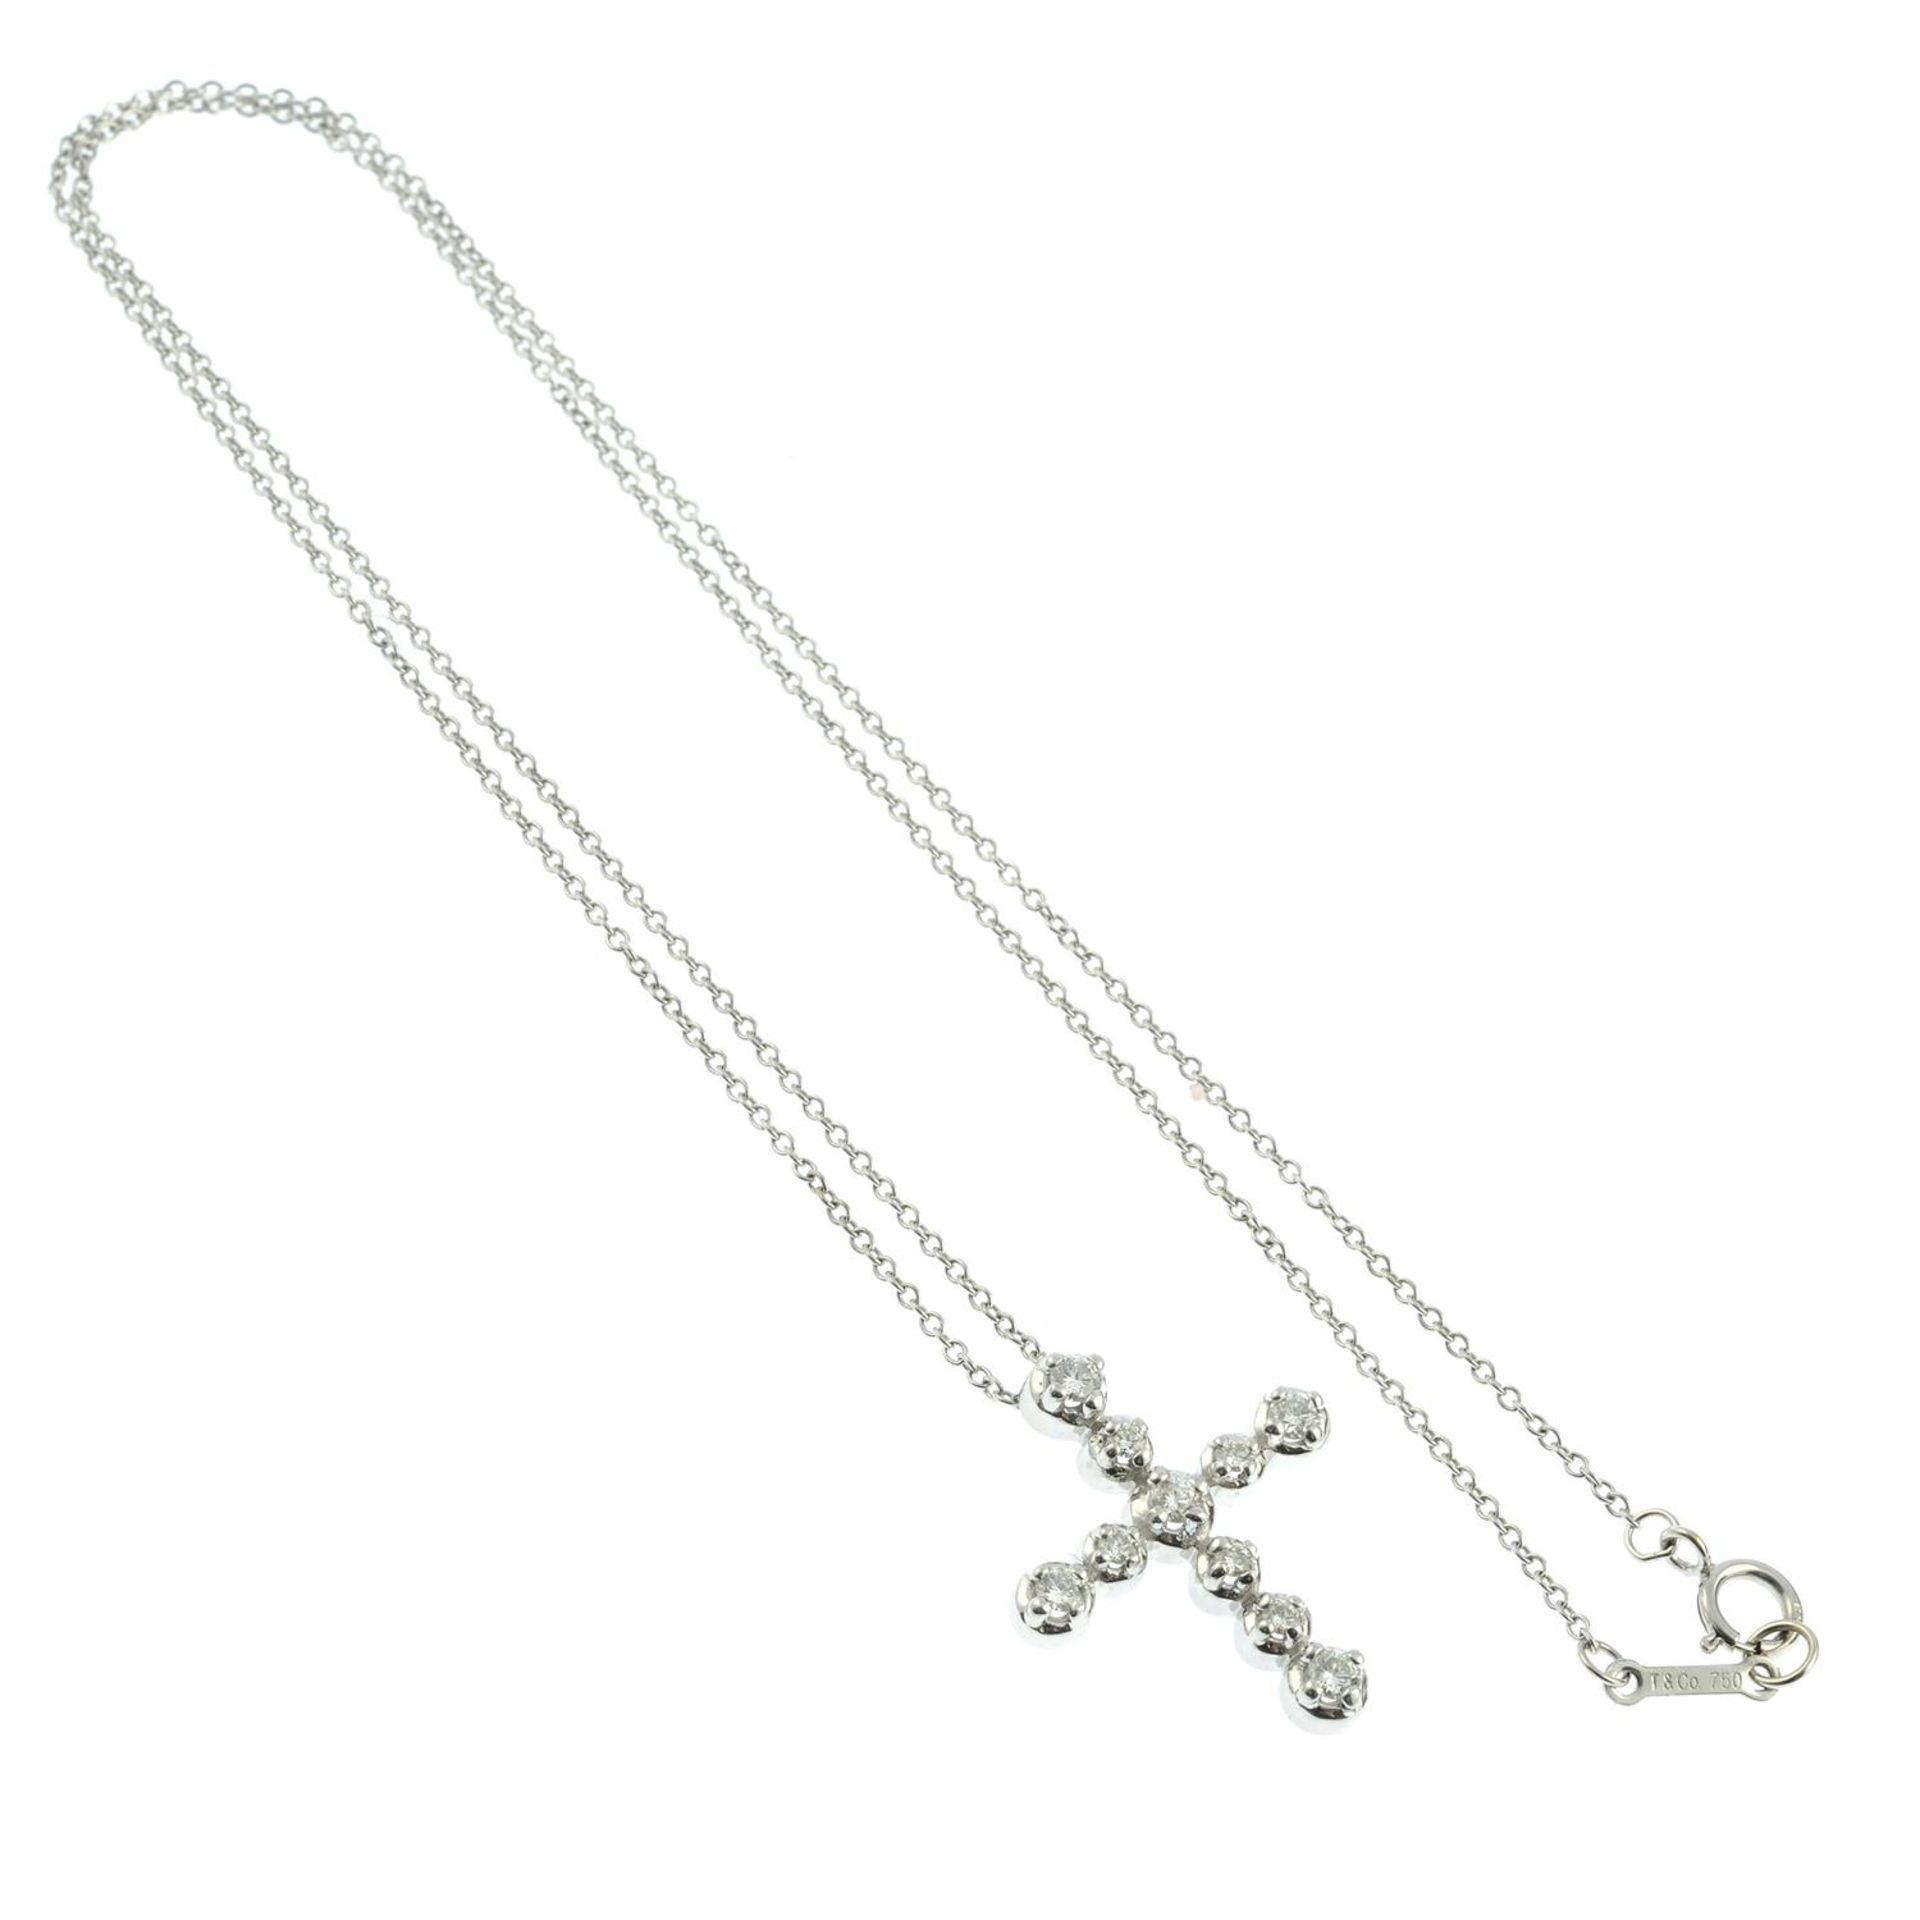 A brilliant-cut diamond cross pendant necklace, by Tiffany & Co. - Image 3 of 3